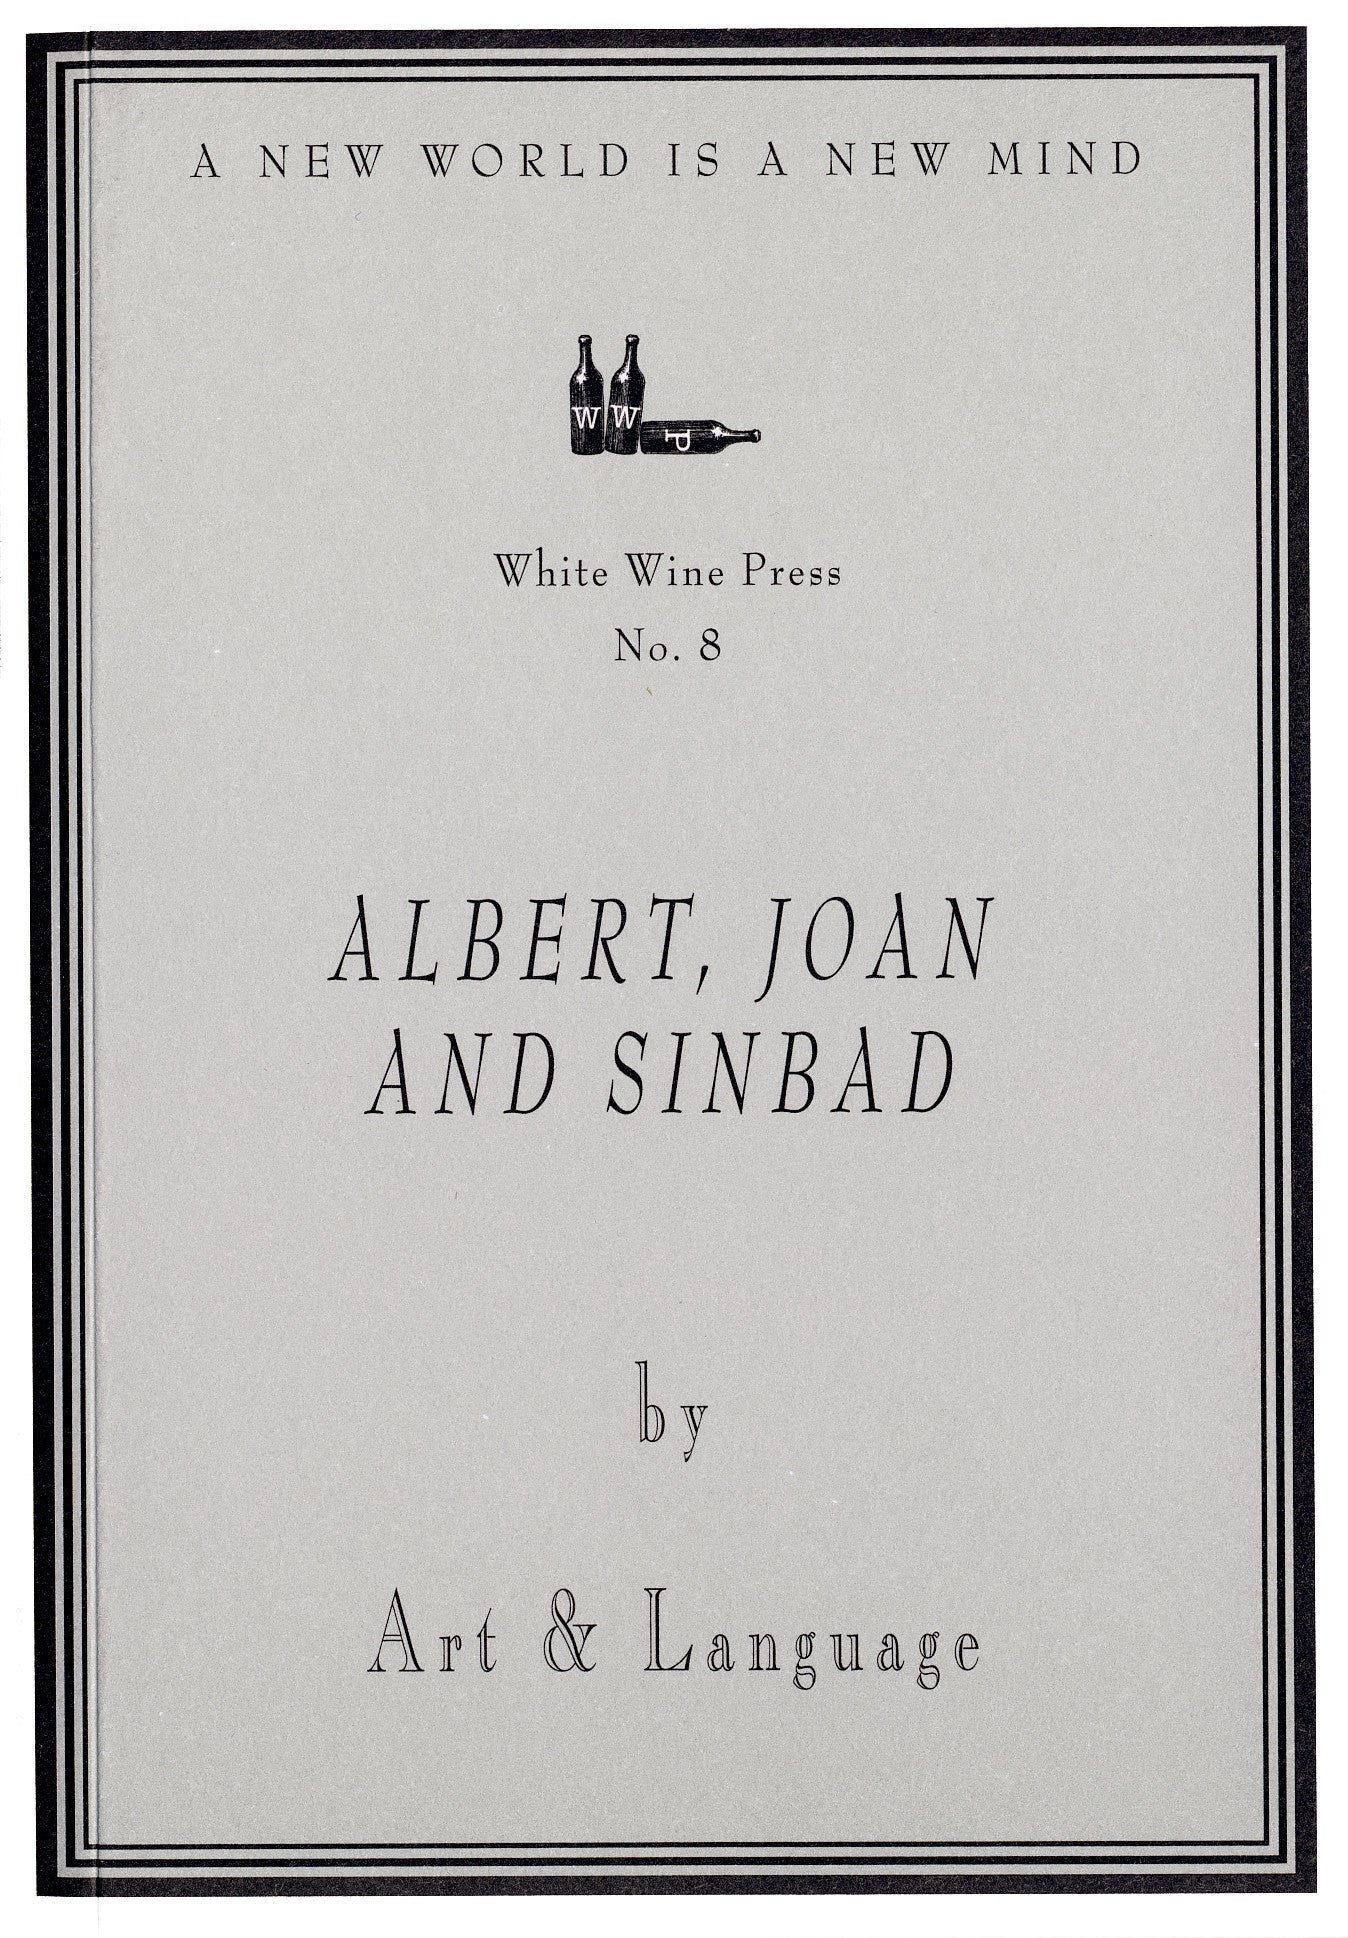 Albert, Joan and Sinbad by Art & Language [White Wine Press No. 8]